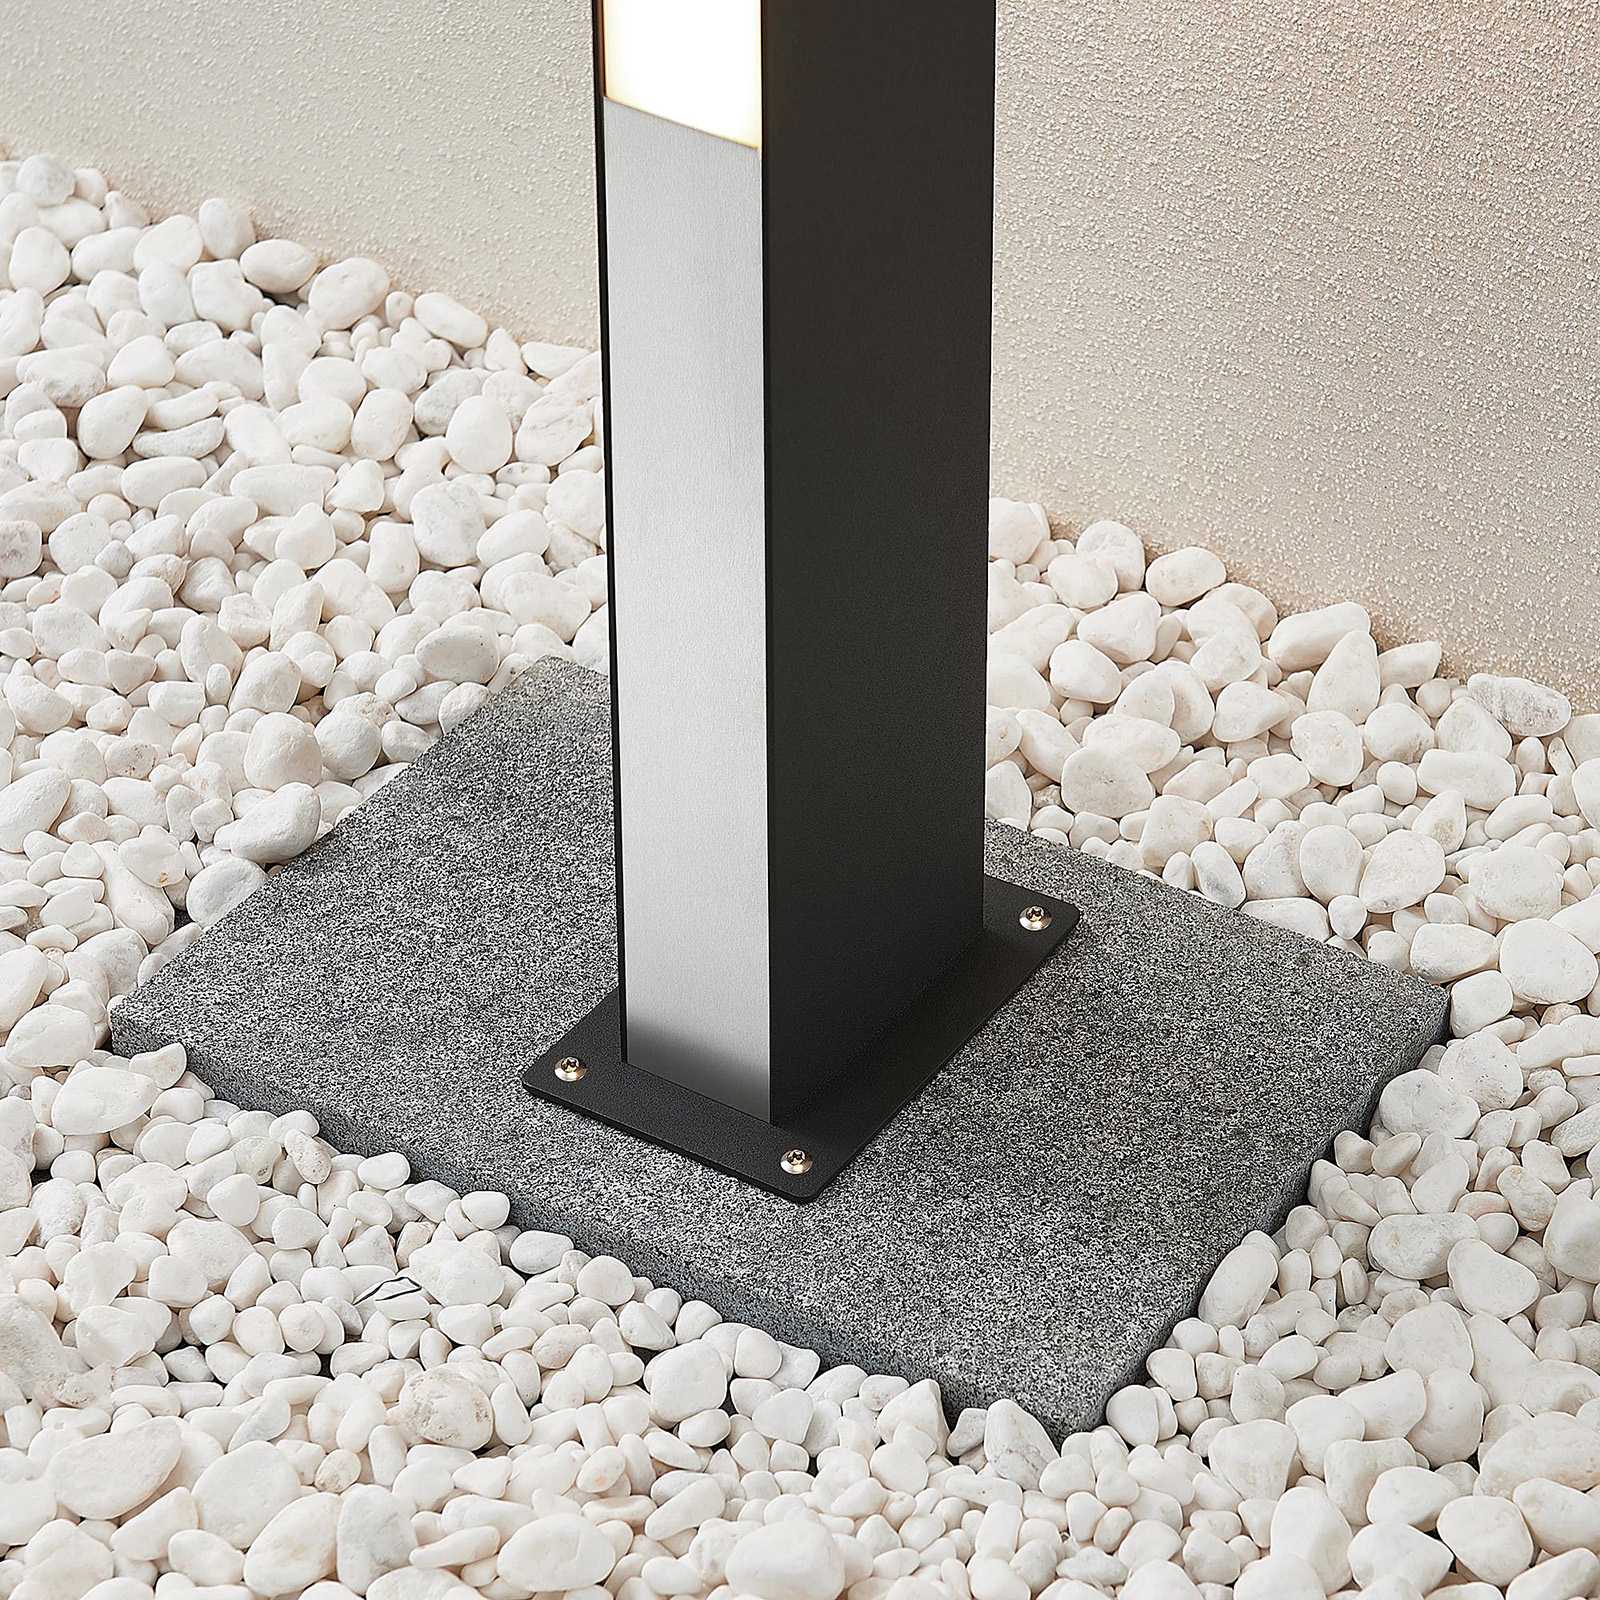 Lucande Aegisa LED-gånglampa, 110 cm